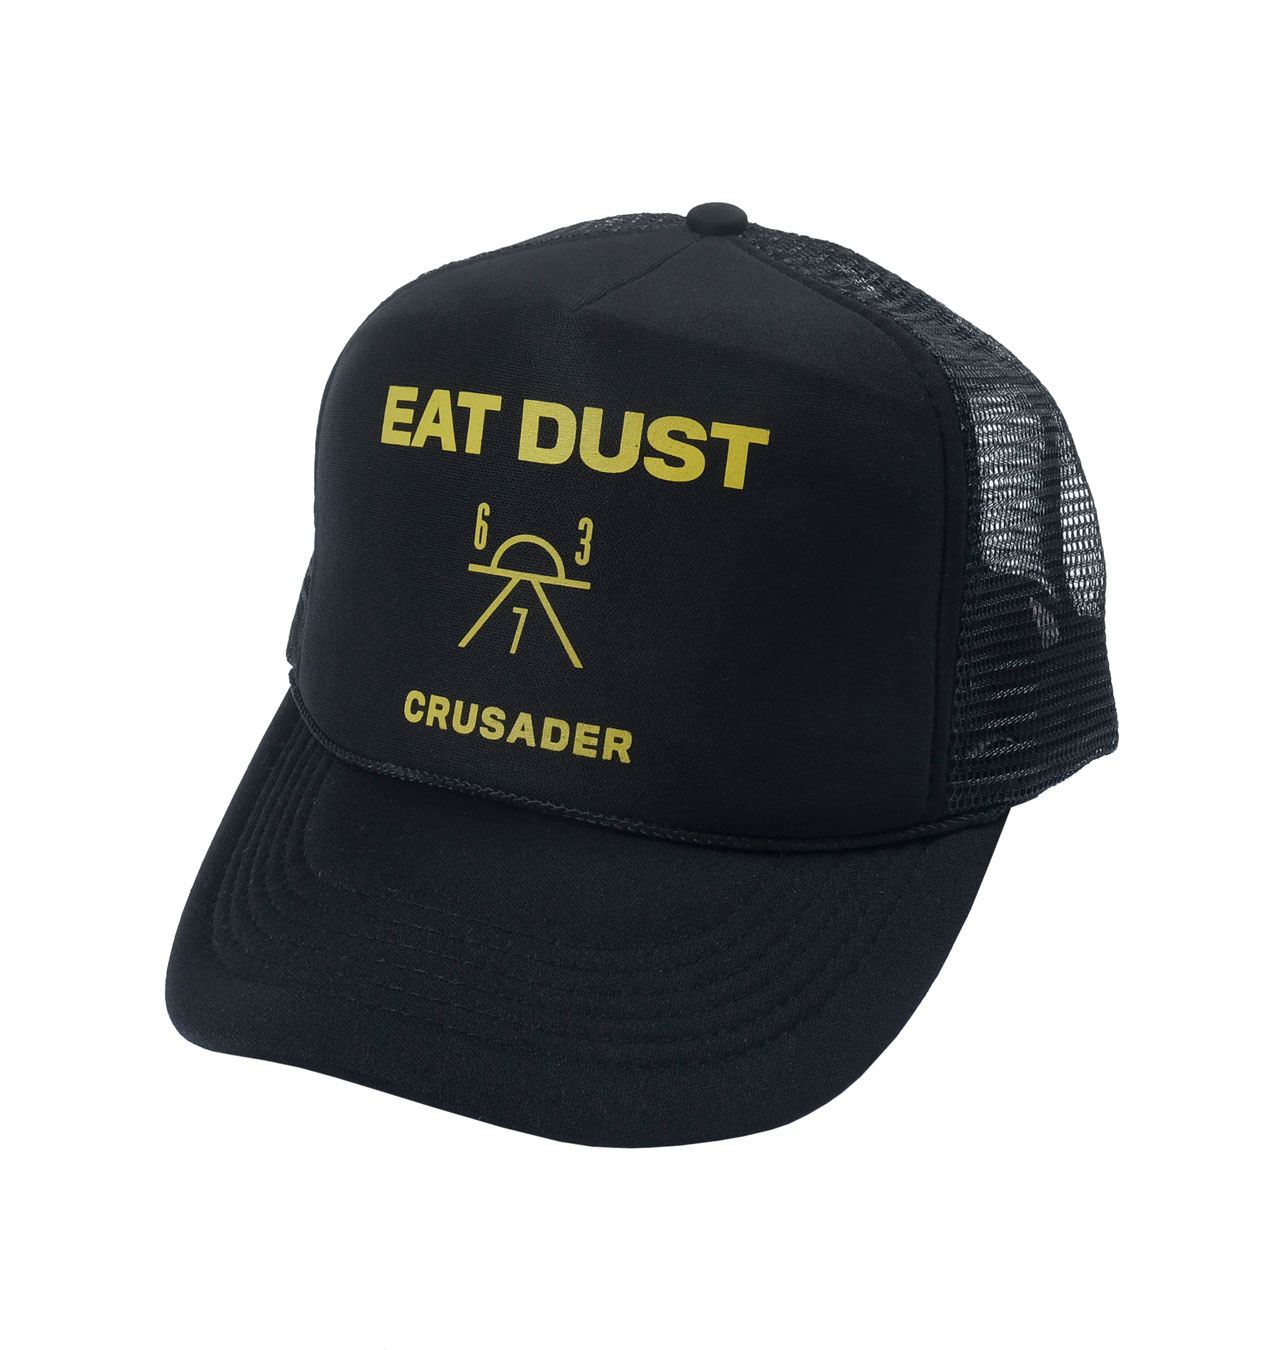 Eat Dust - Crusader Trucker Cap - Black